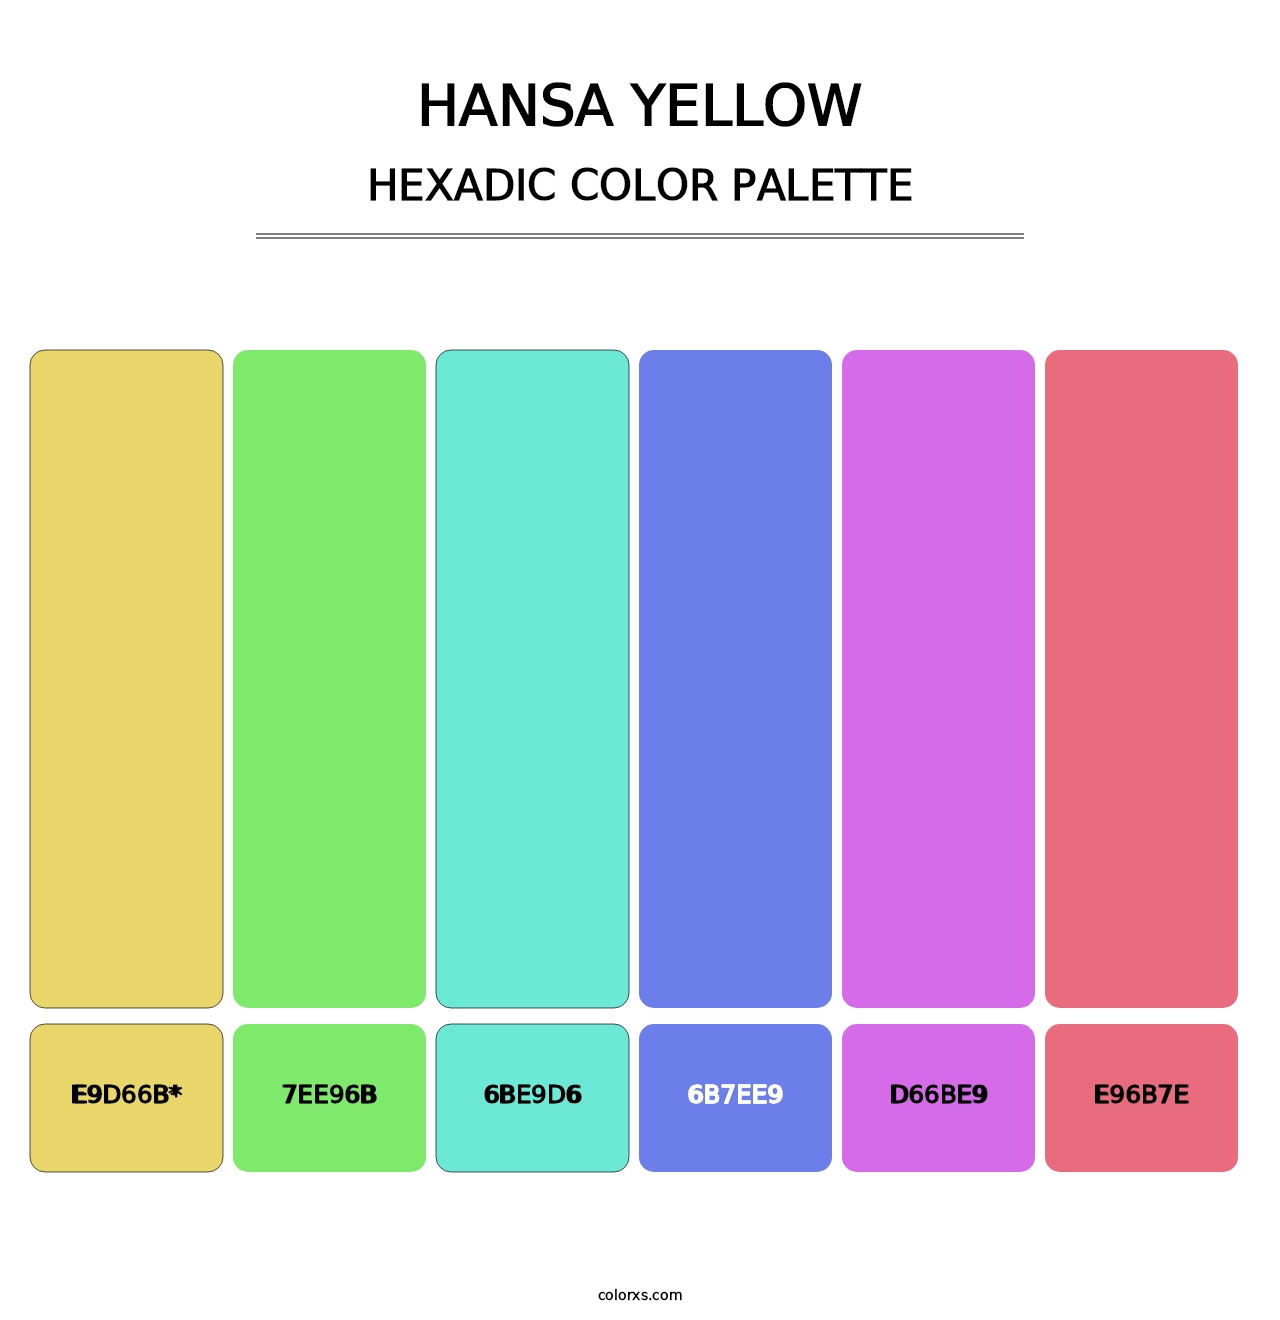 Hansa Yellow - Hexadic Color Palette